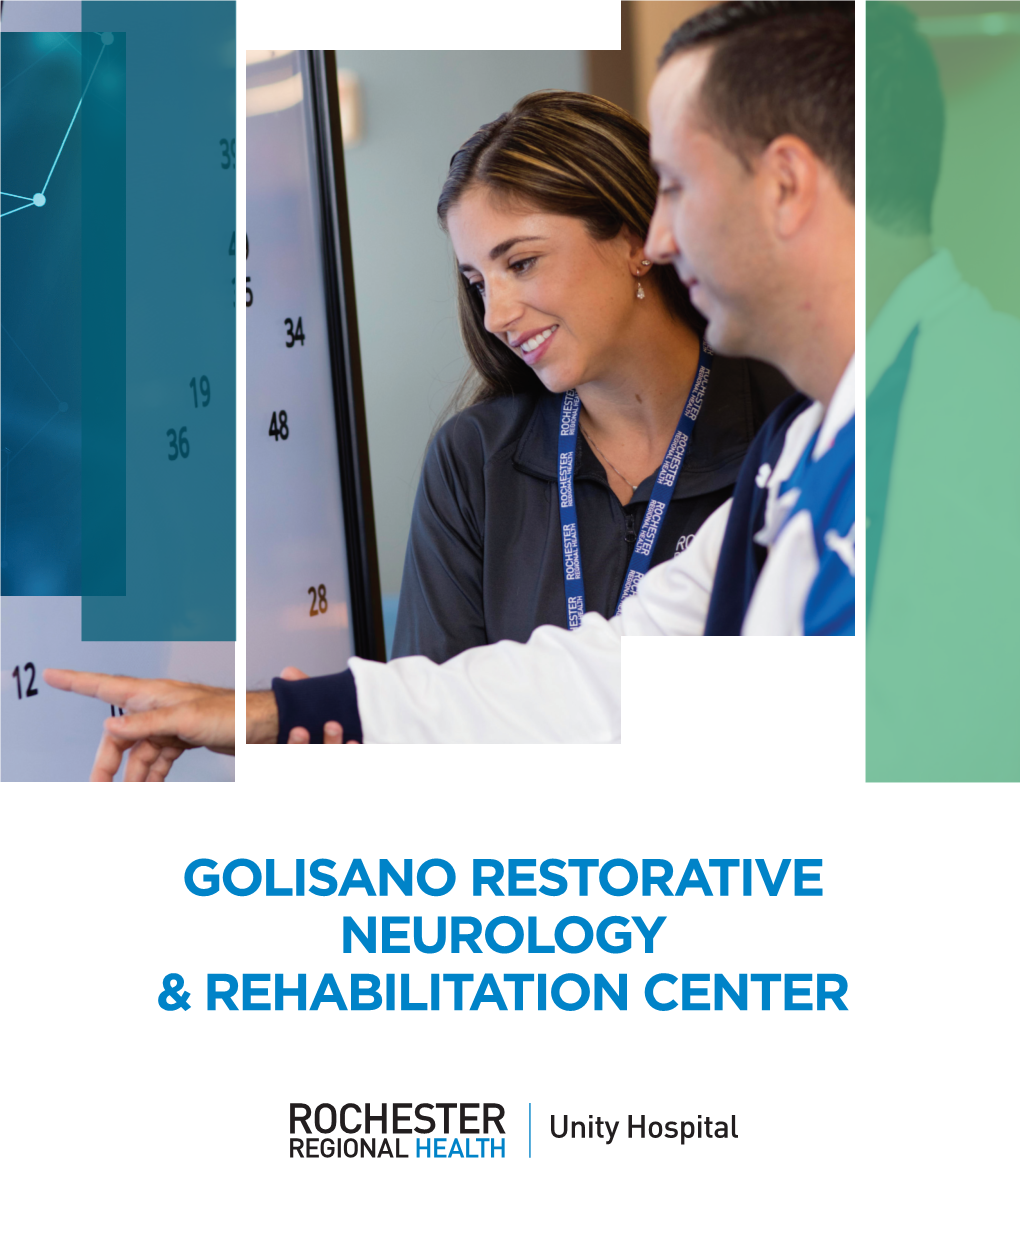 Golisano Restorative Neurology & Rehabilitation